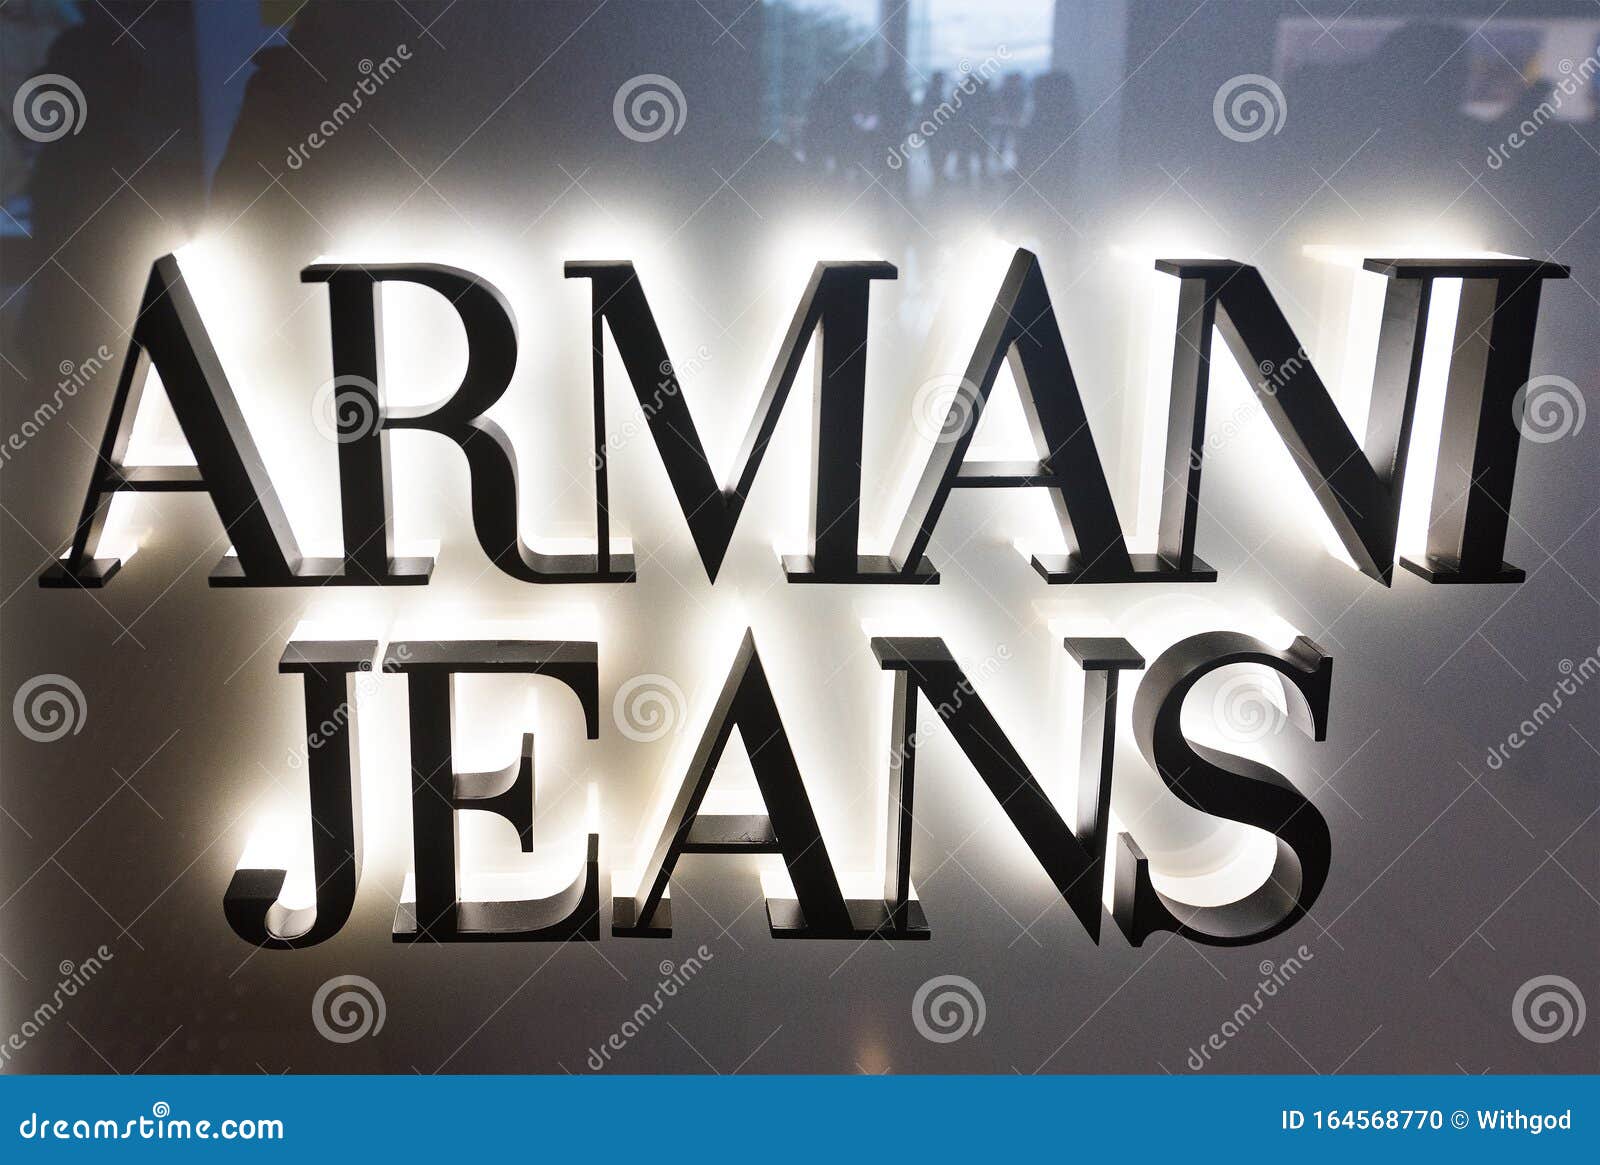 armani jeans store